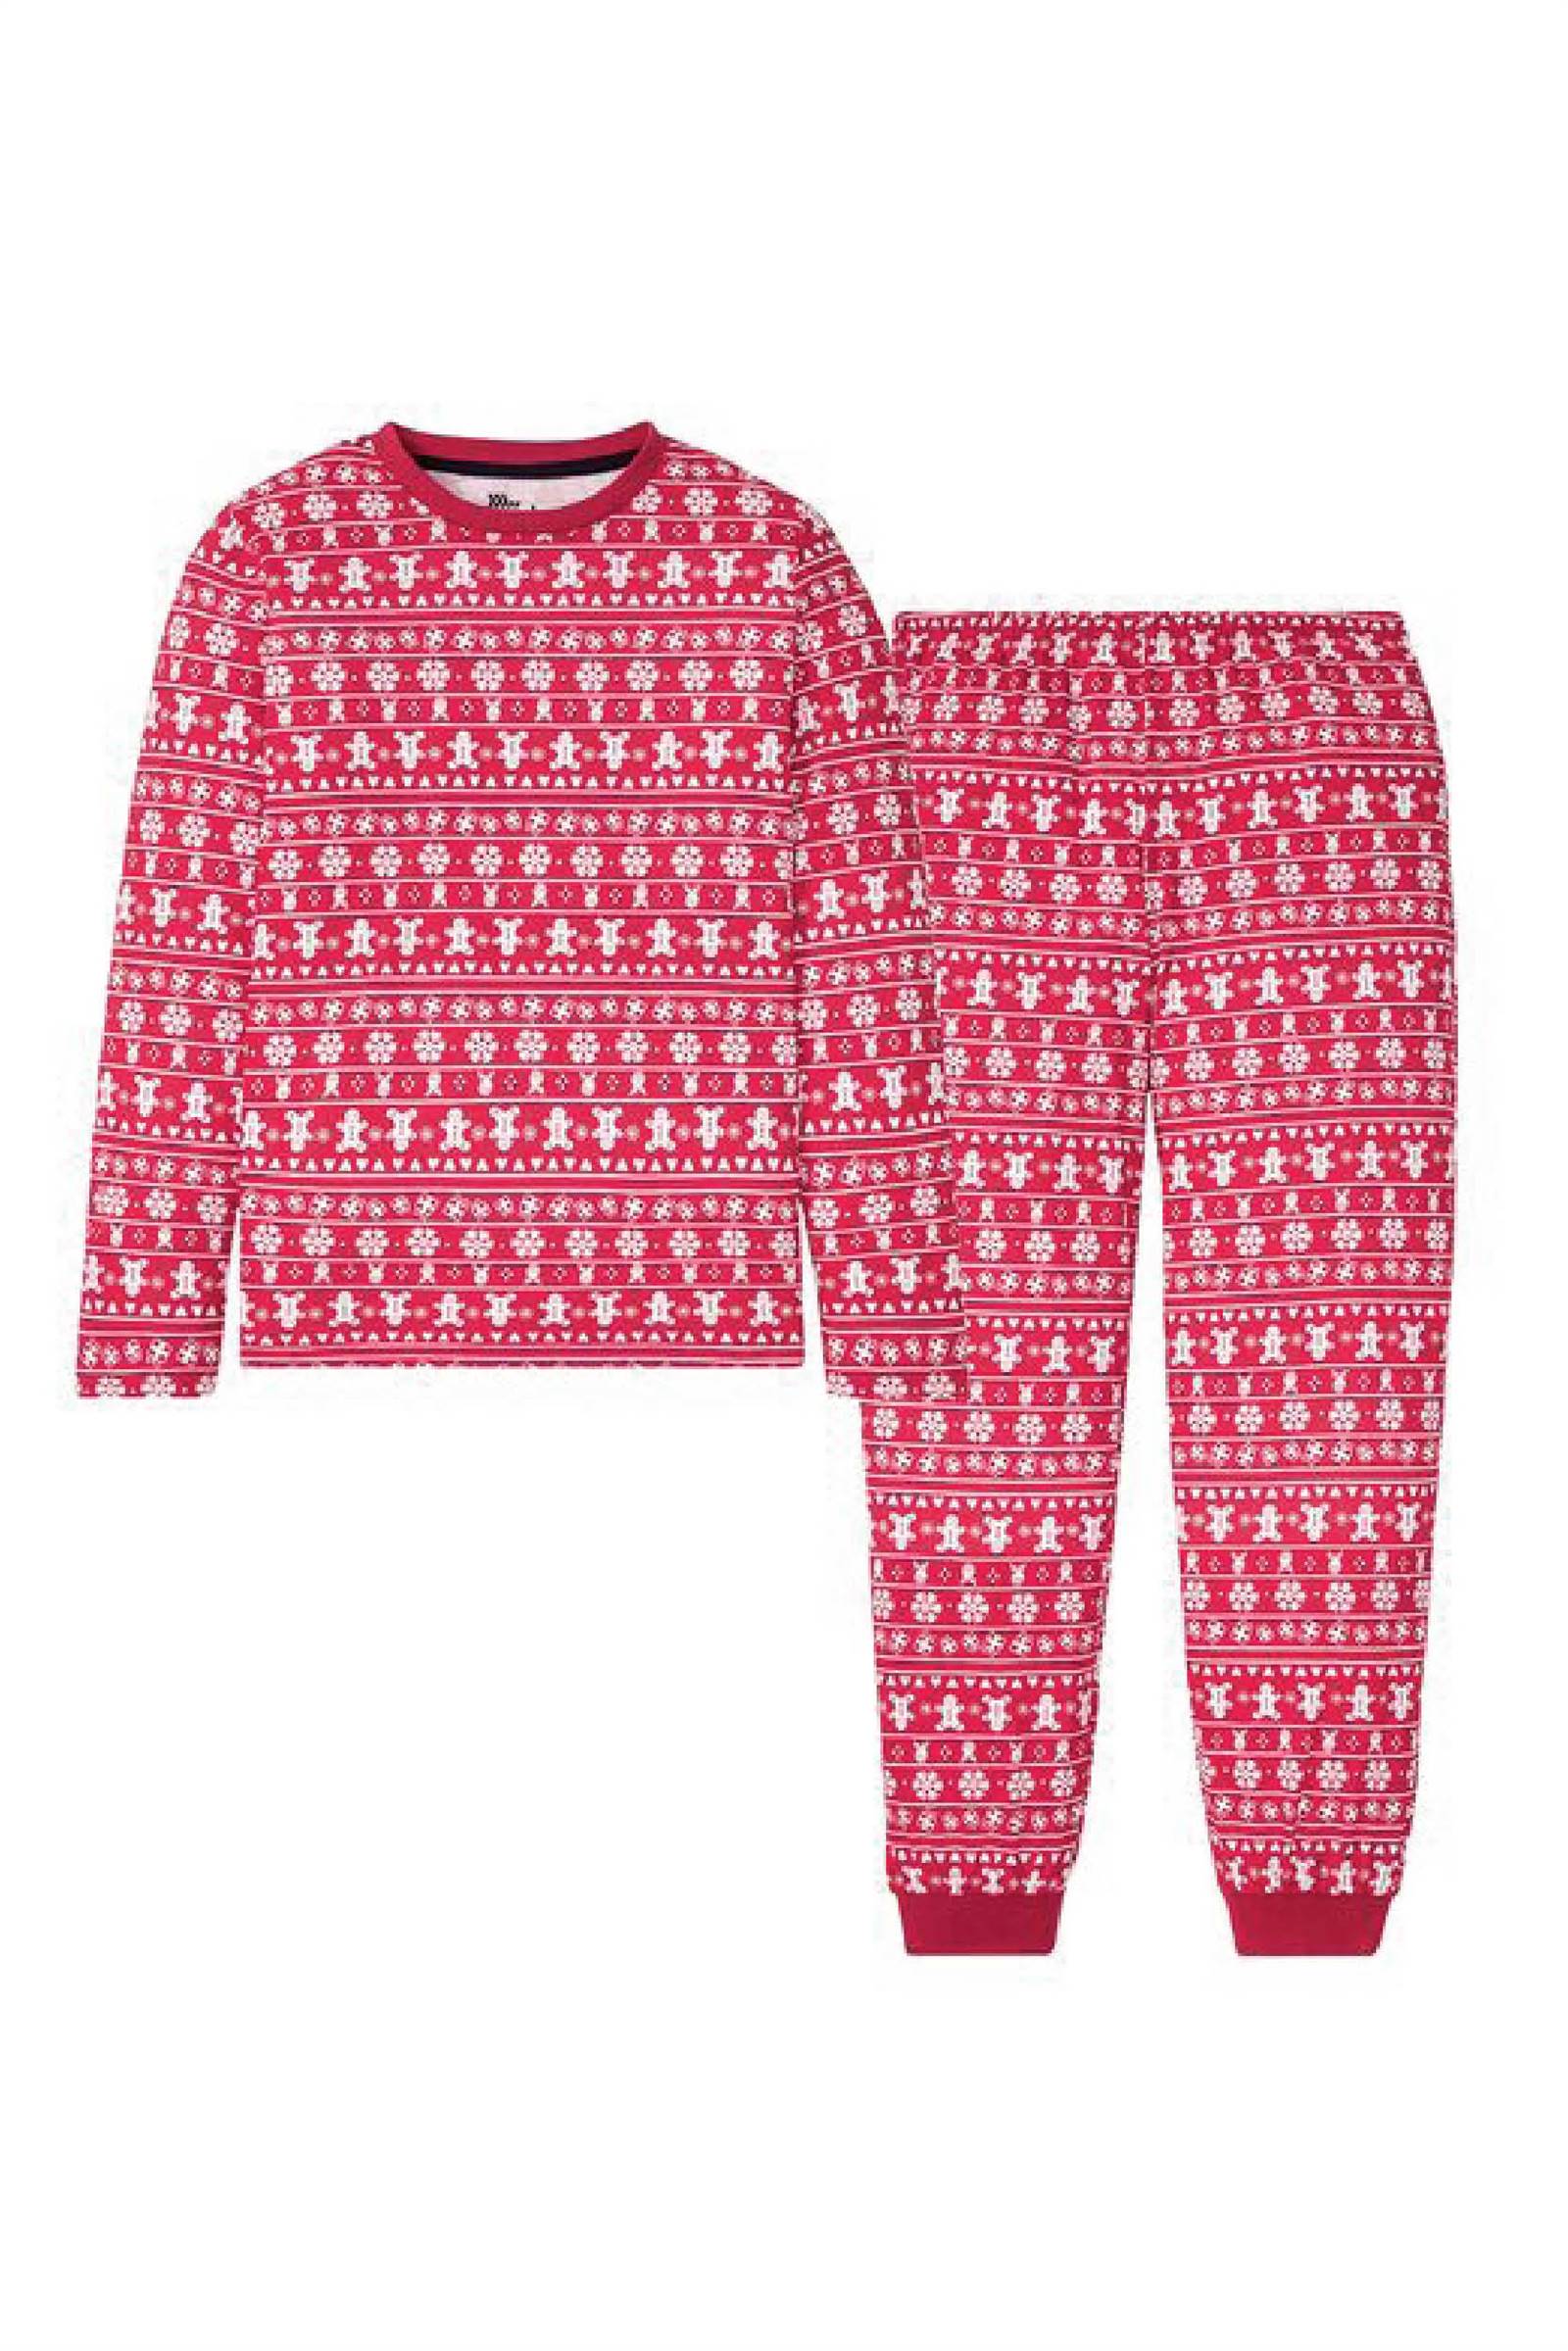 regalos navidad lidl aldi. Pijama de Navidad